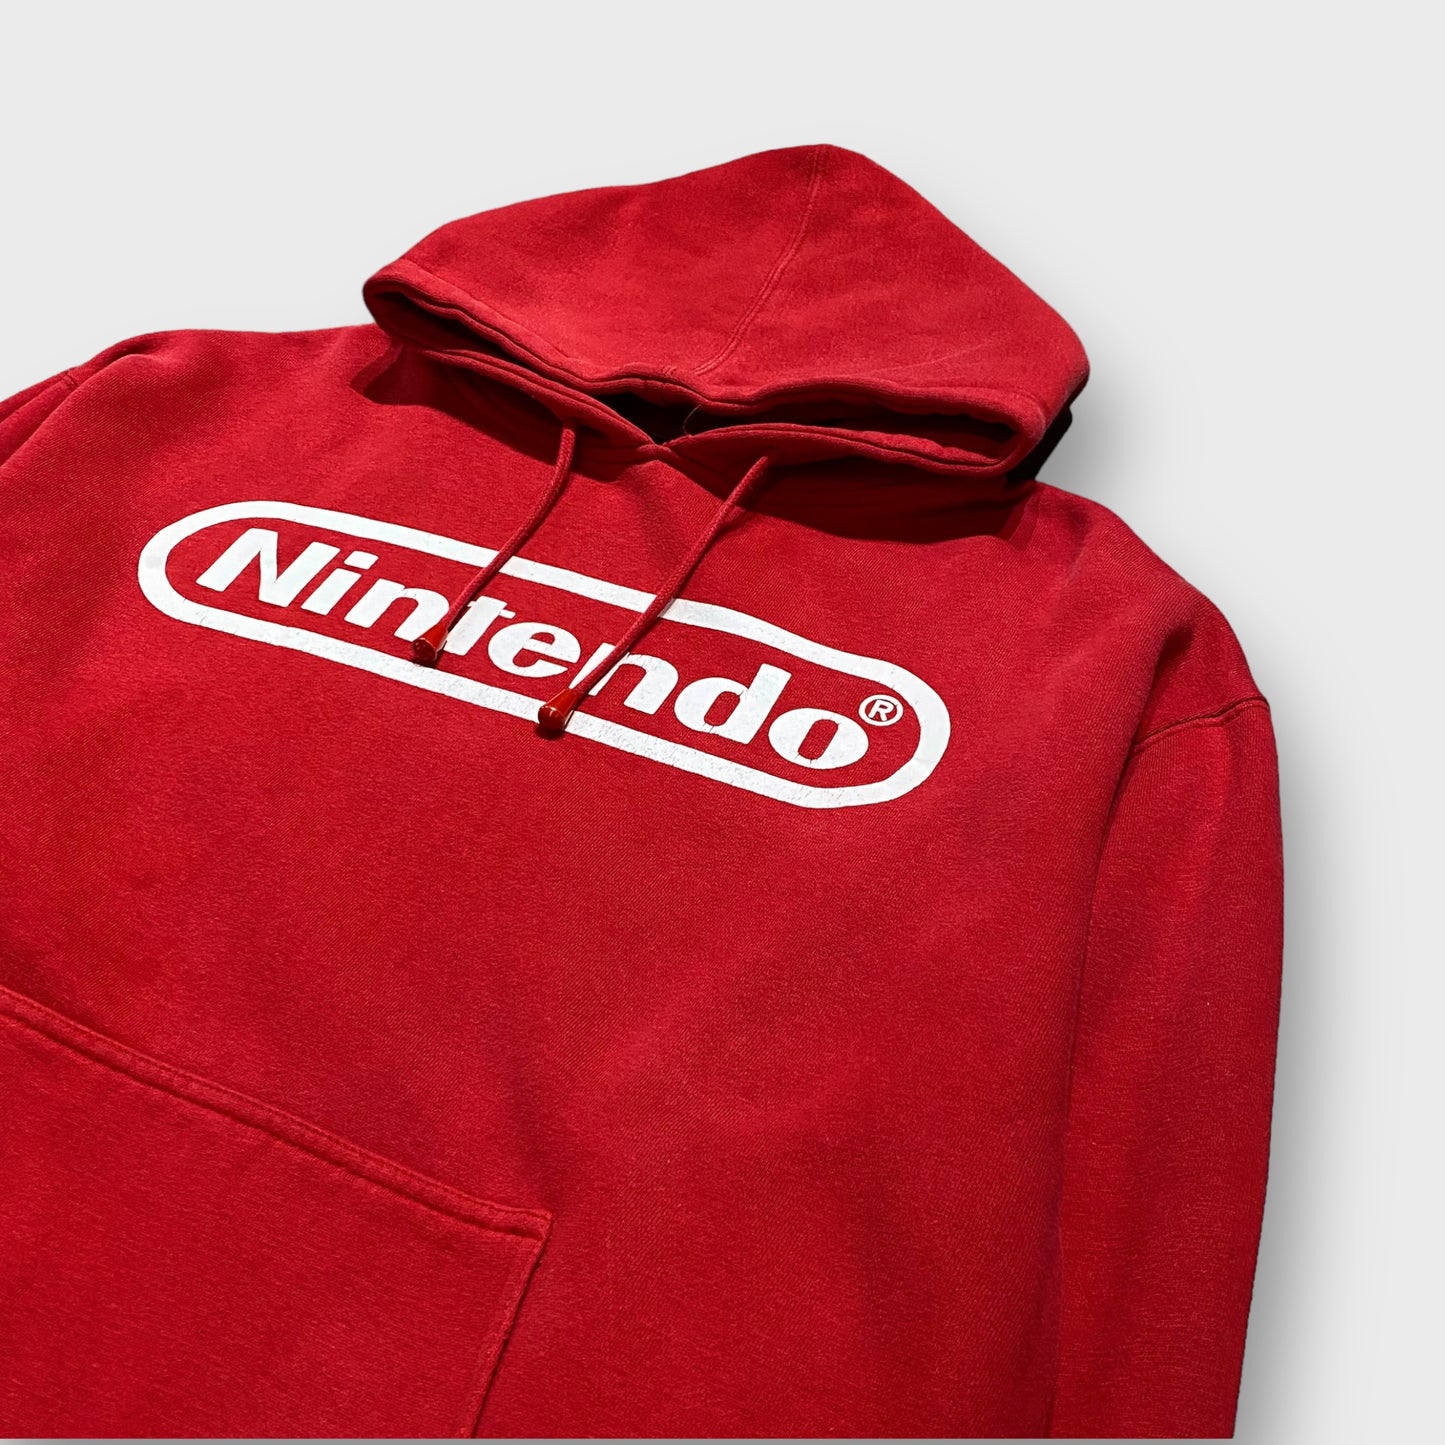 04's "Nintendo" Company logo design hoodie